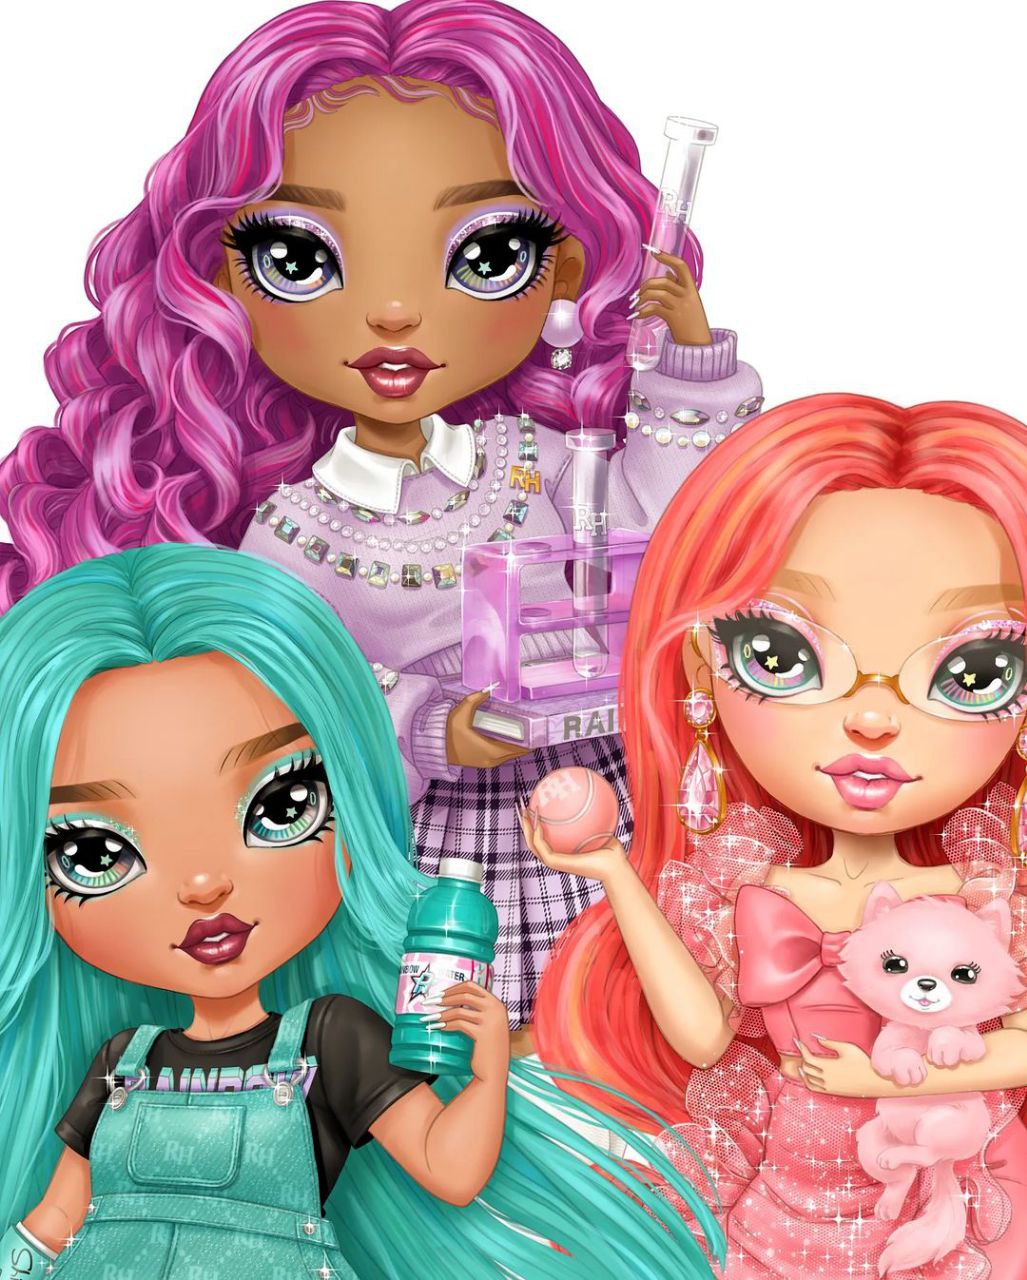 Rainbow High New Friends dolls 2023 Pinkly Paige, Lilac Lane, Blu